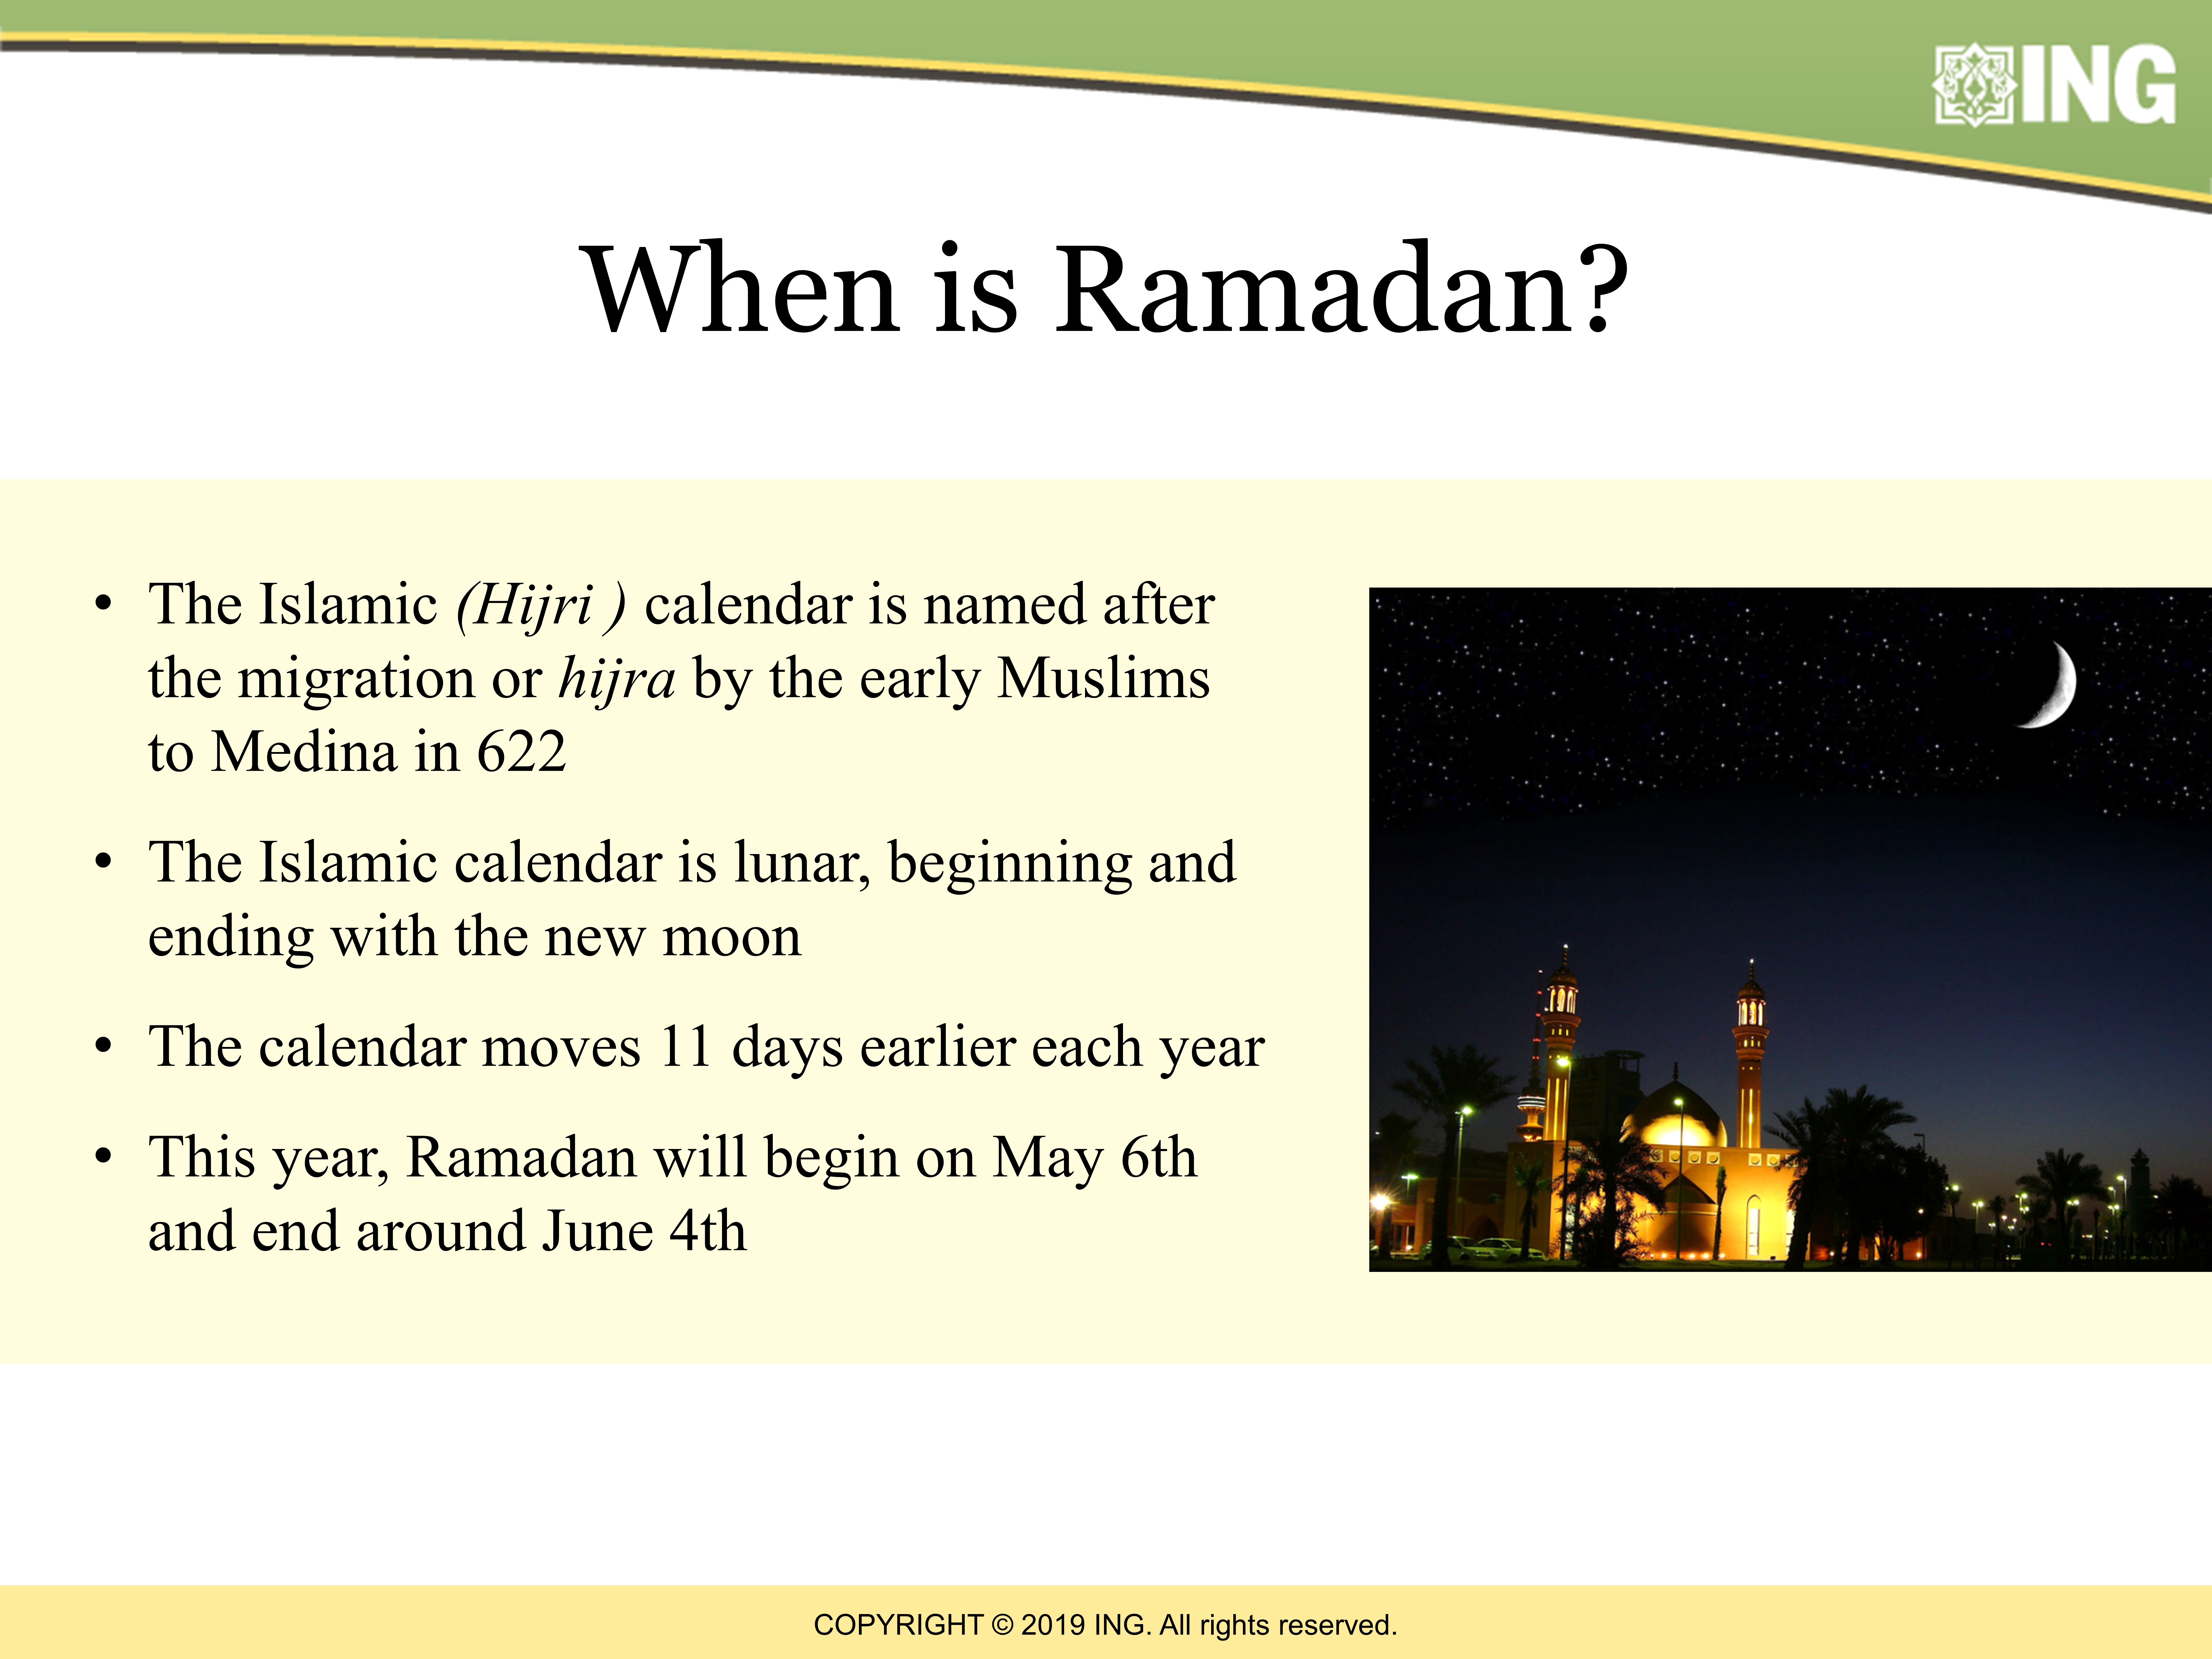 How do American Muslims observe Ramadan?